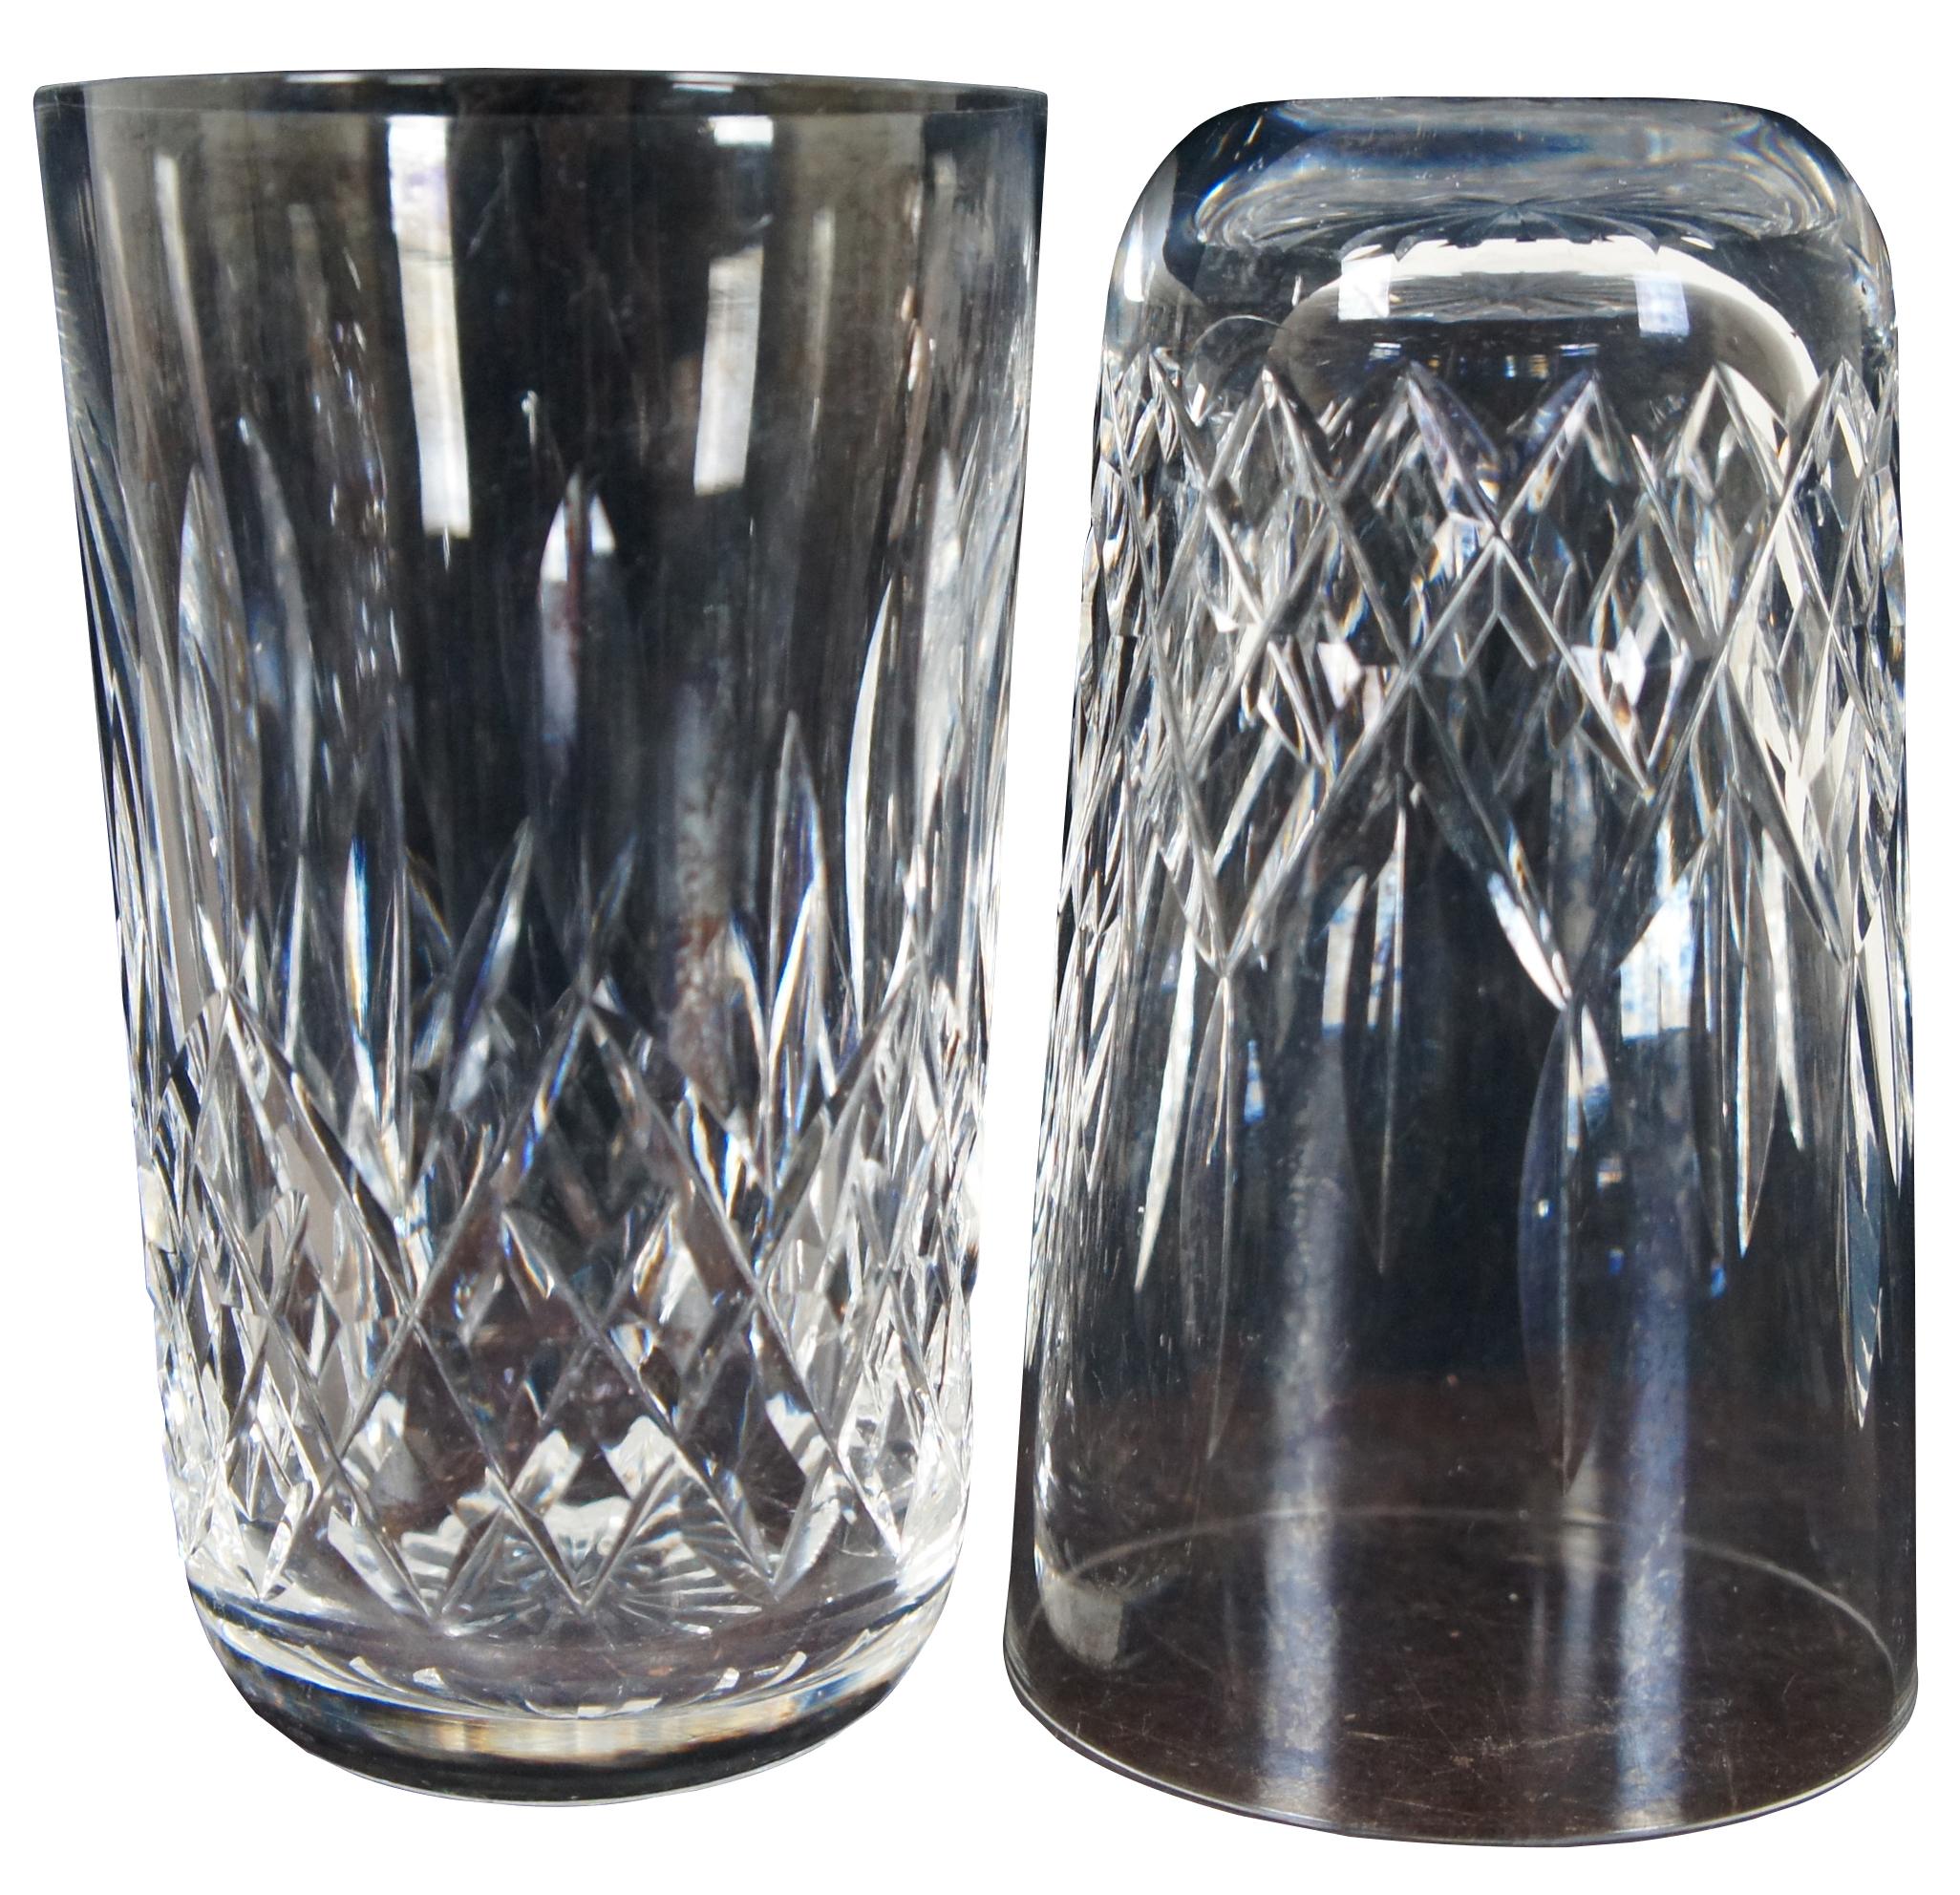 waterford crystal water glasses